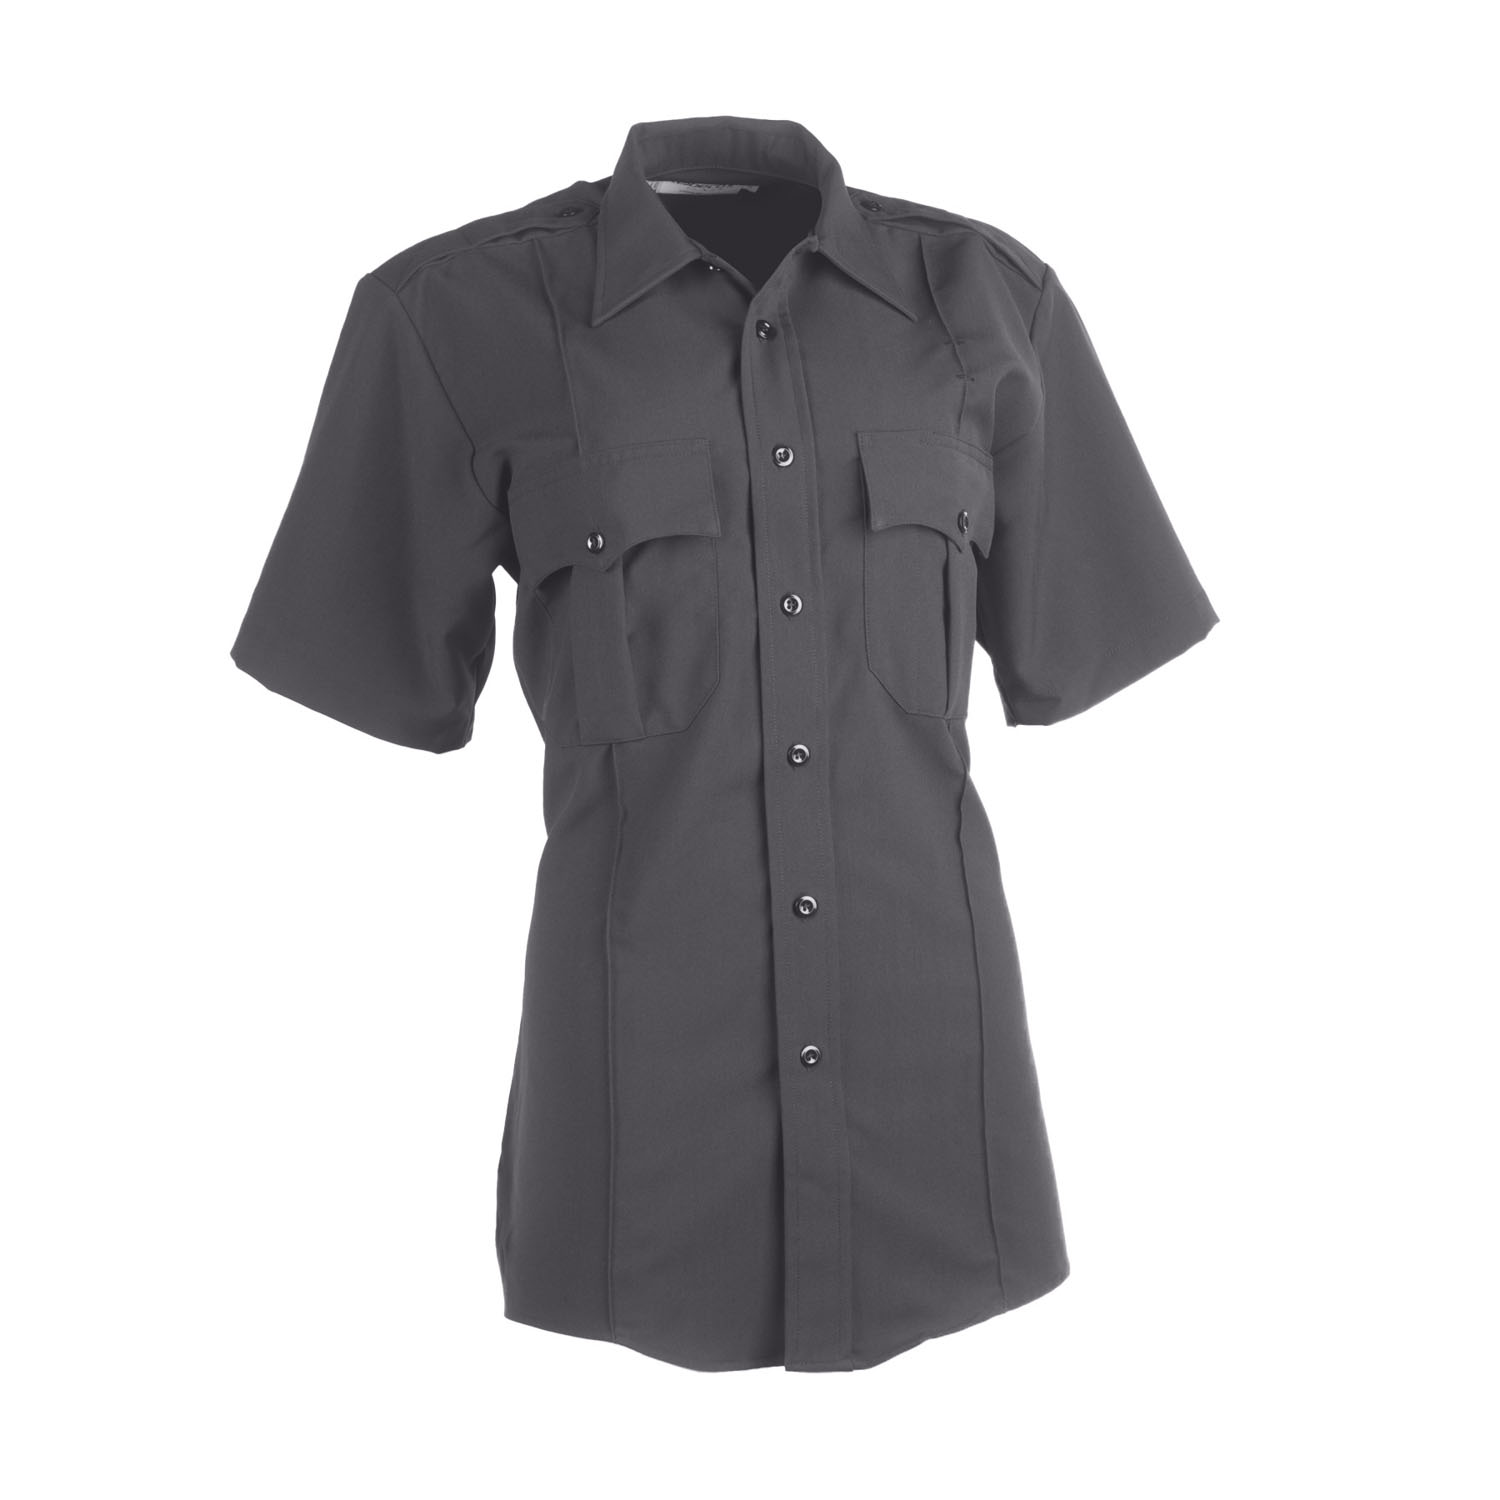 Postal Police - Short Sleeve Shirt